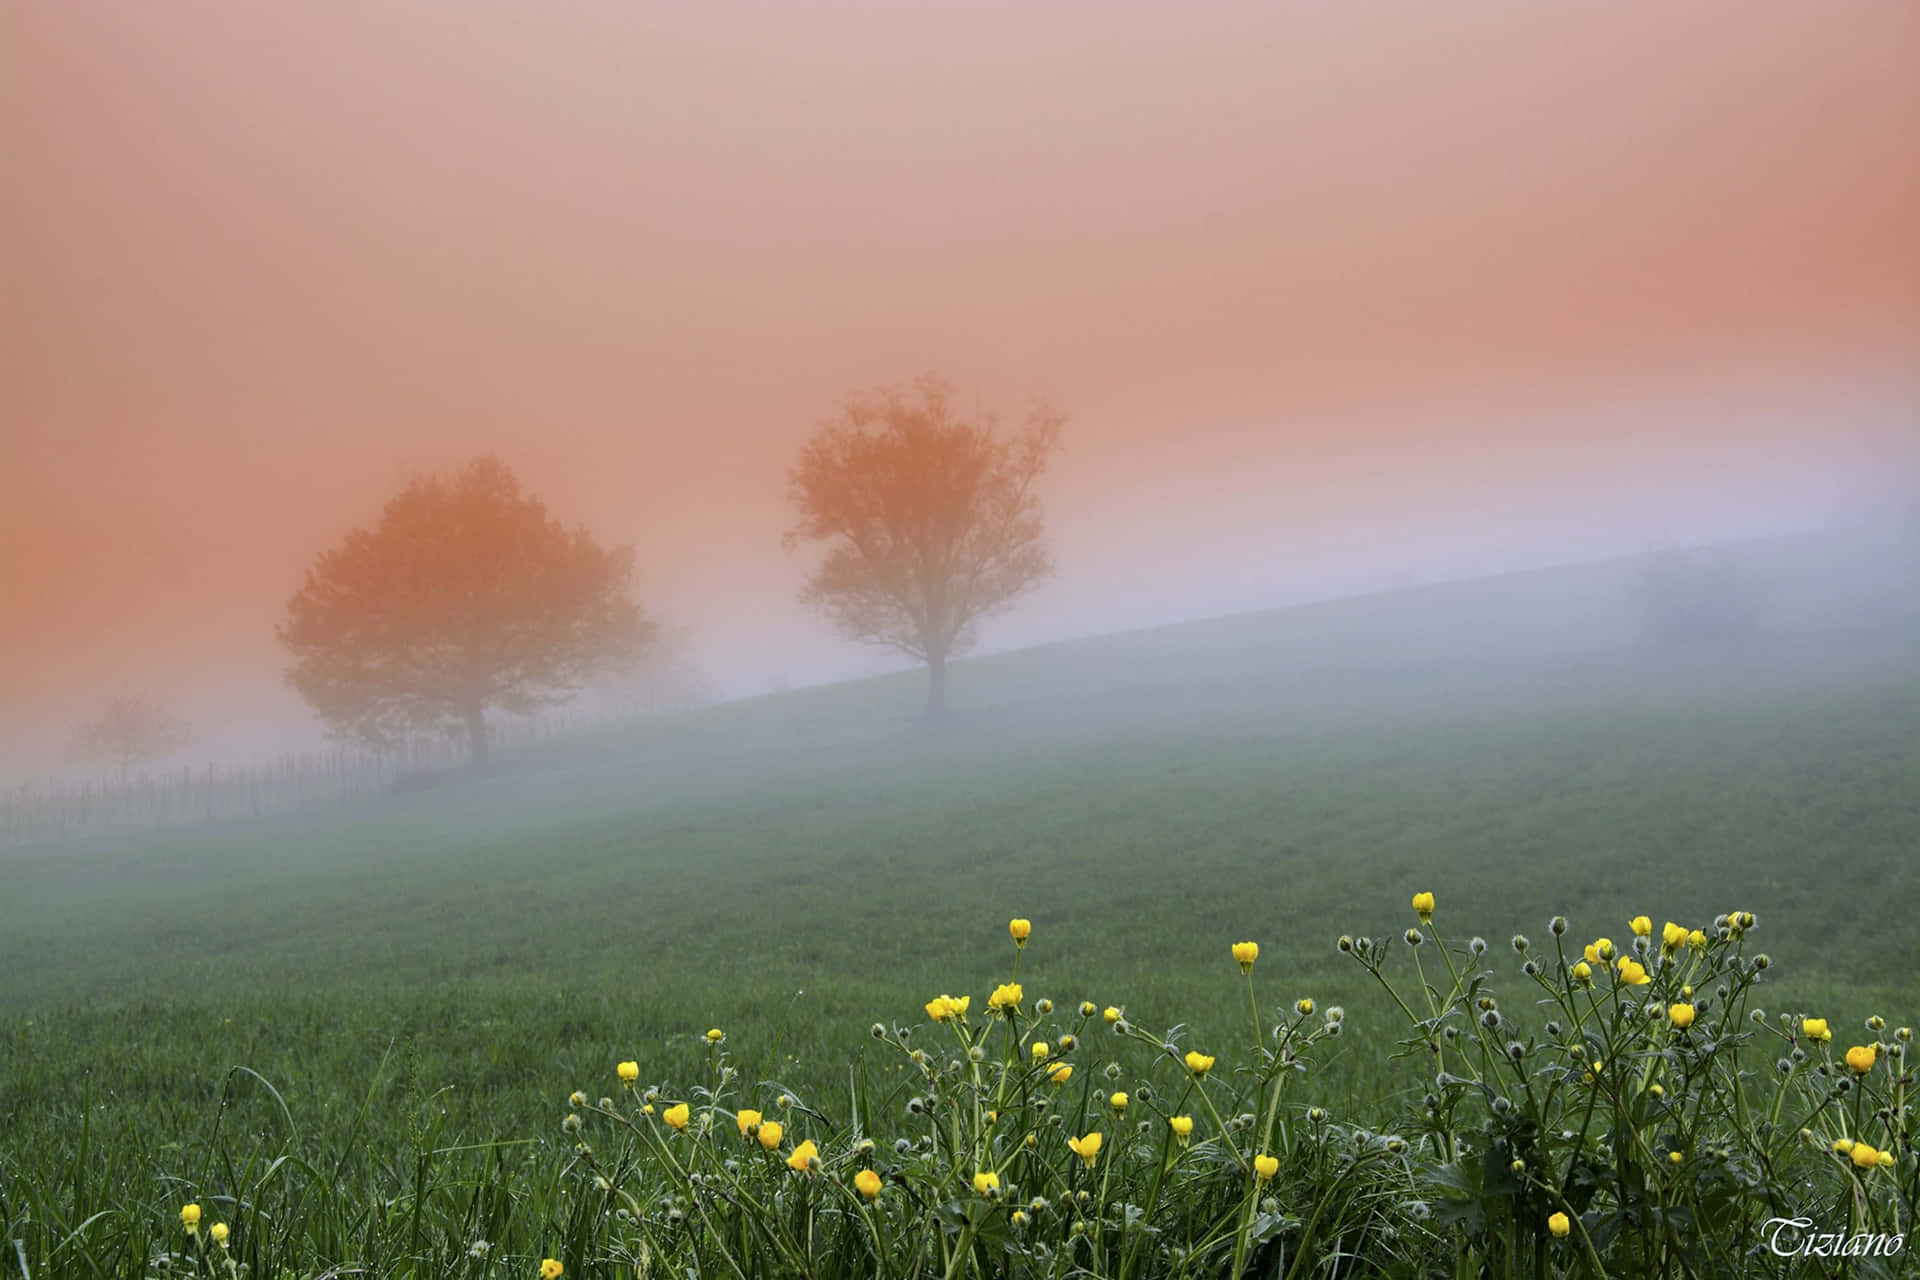 Eerie Fog Blankets the Landscape